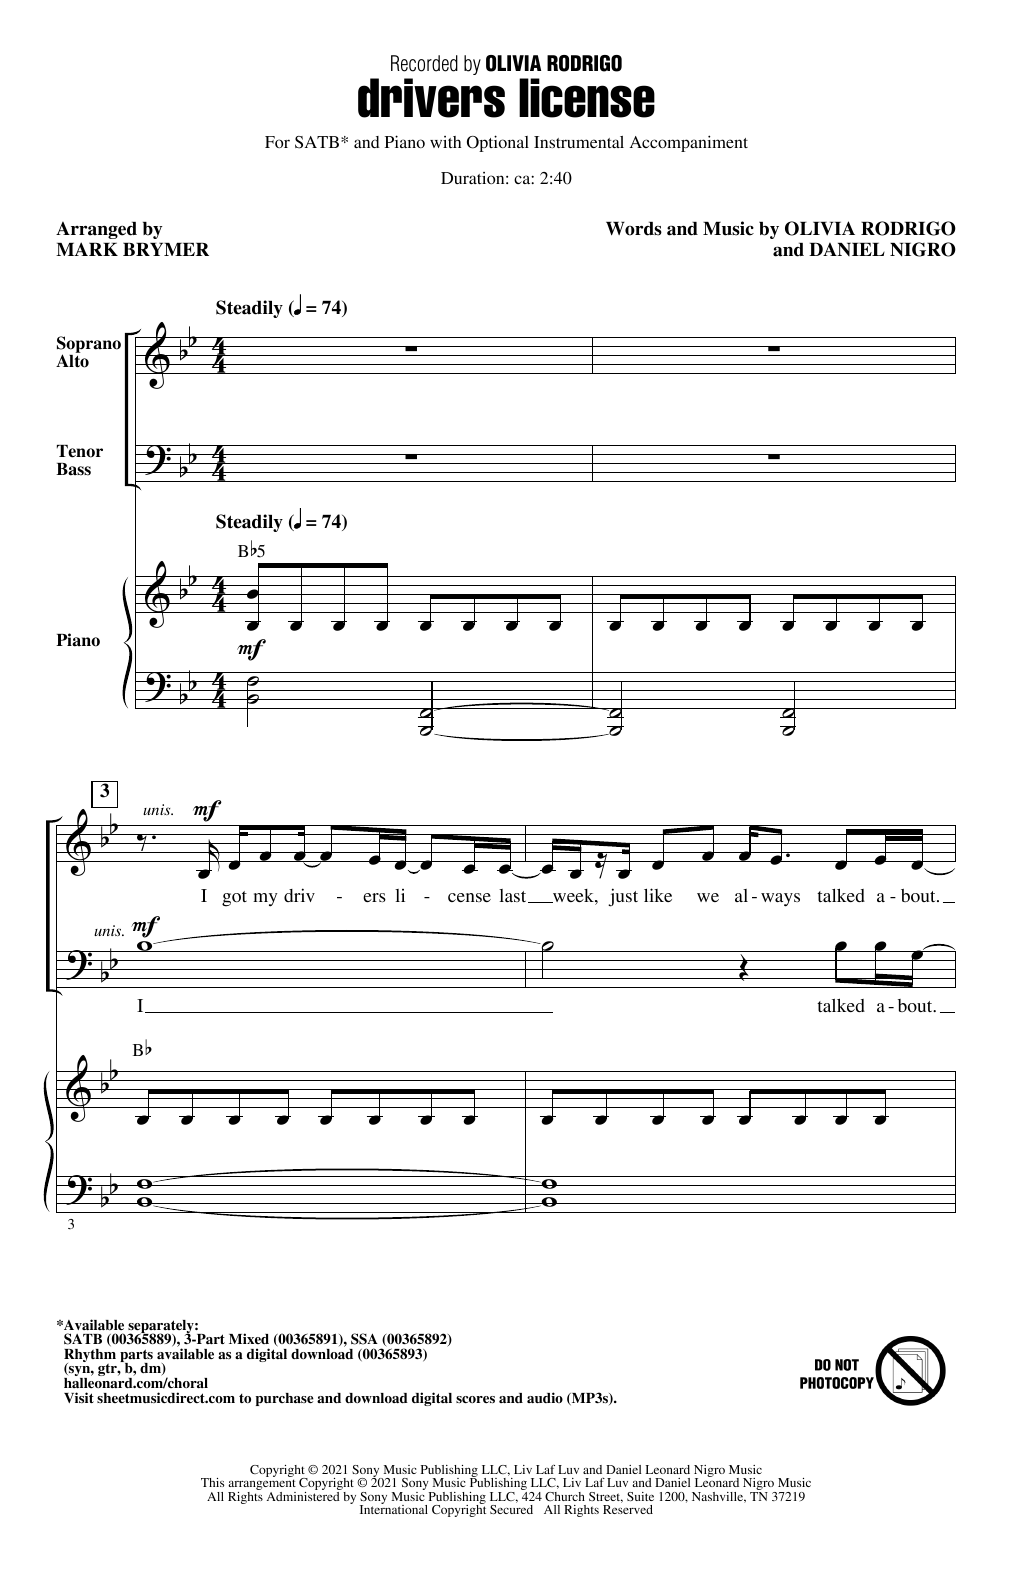 Olivia Rodrigo drivers license (arr. Mark Brymer) Sheet Music Notes & Chords for SSA Choir - Download or Print PDF